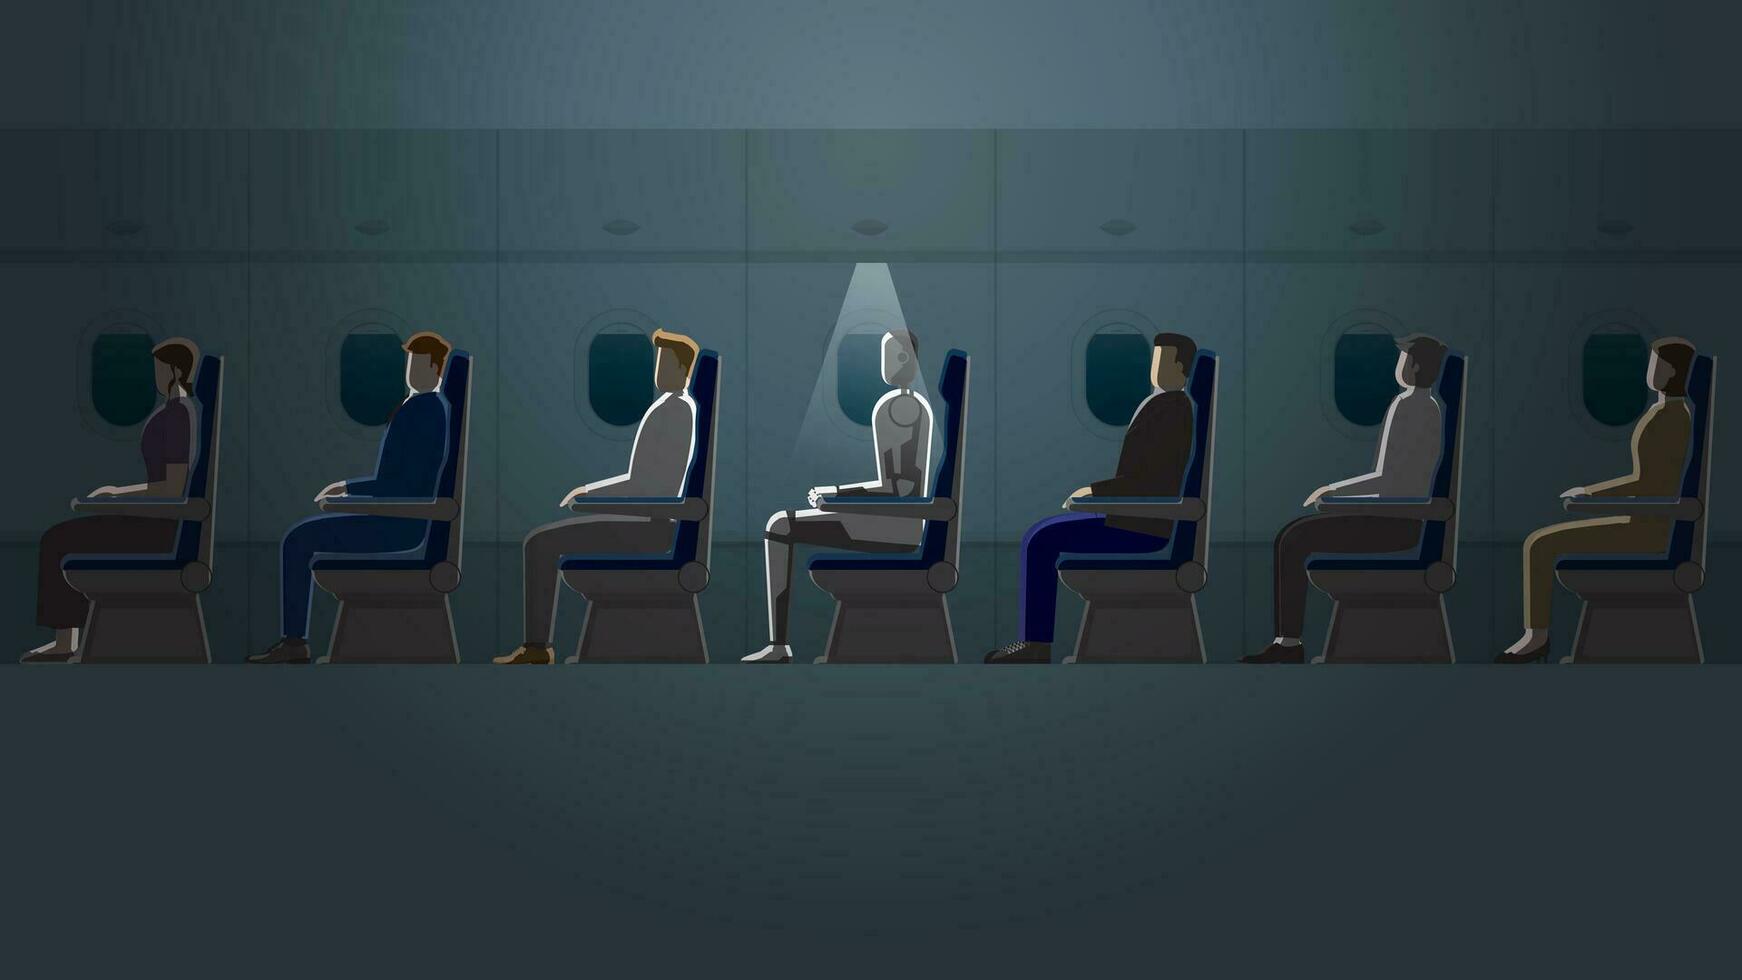 robot sitting awake in a plane cabin in the dark vector